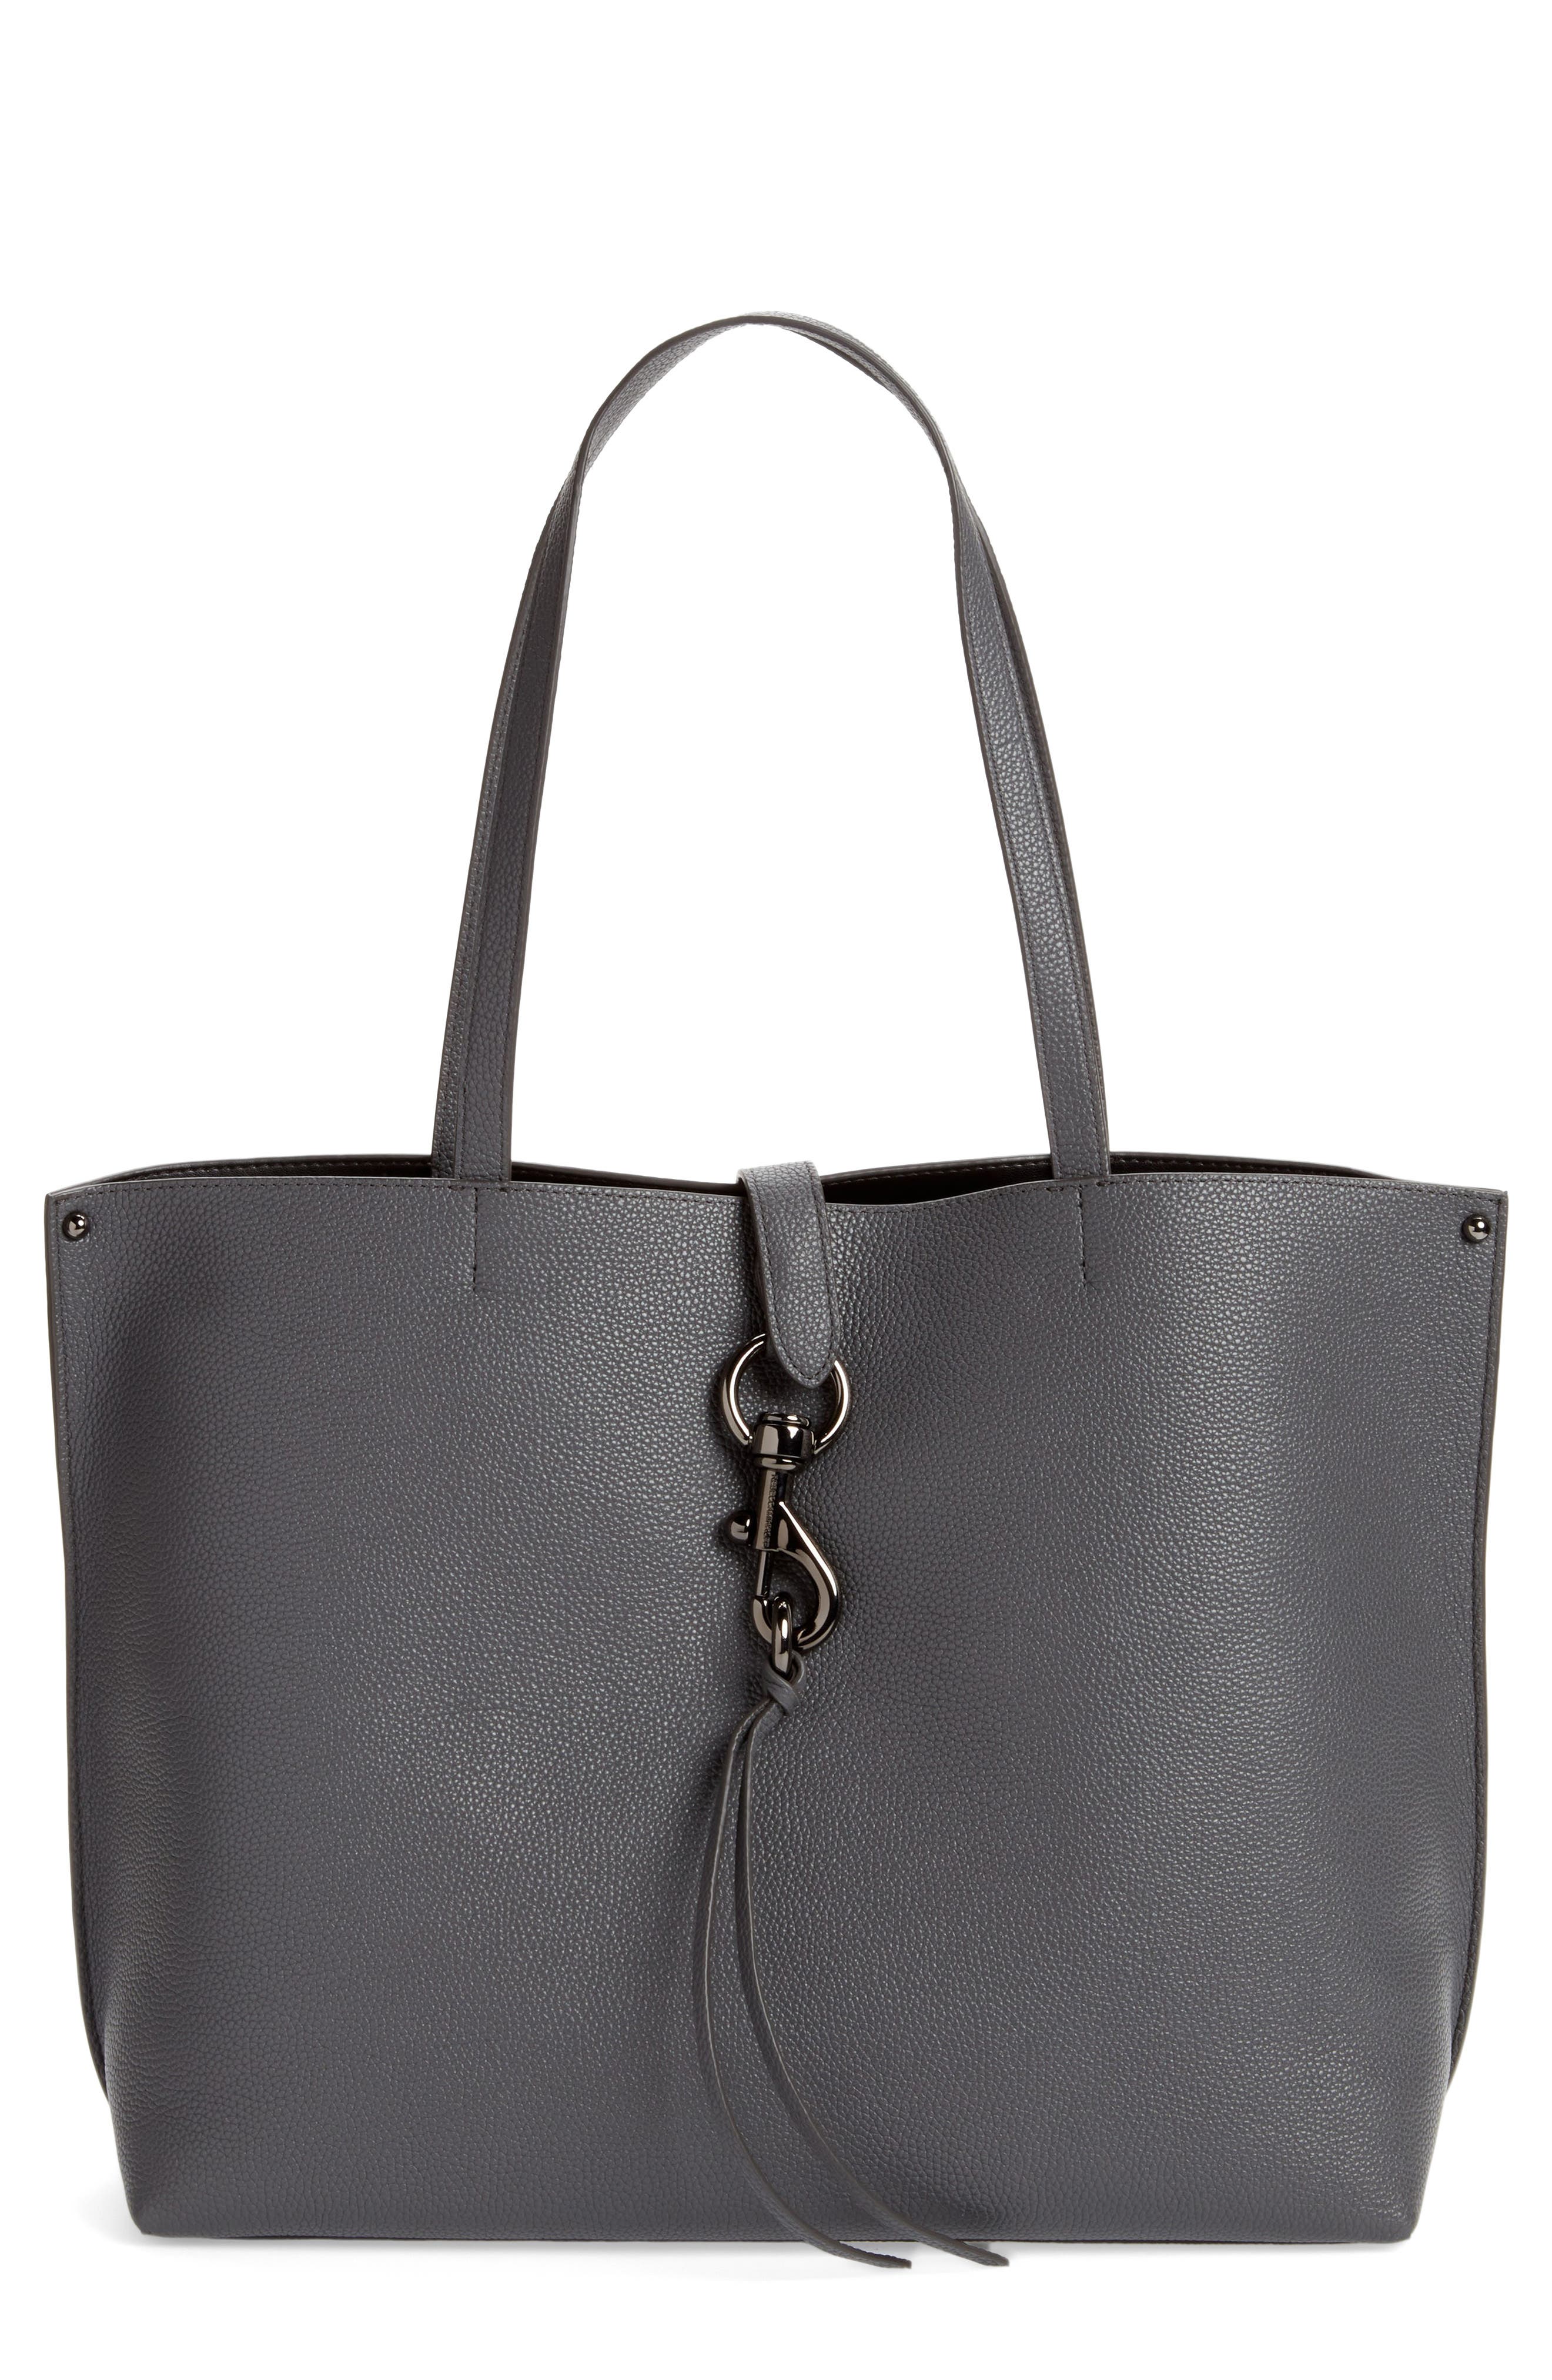 discount 68% Beige/Black Single Tous Tote bag WOMEN FASHION Bags Tote bag Work 